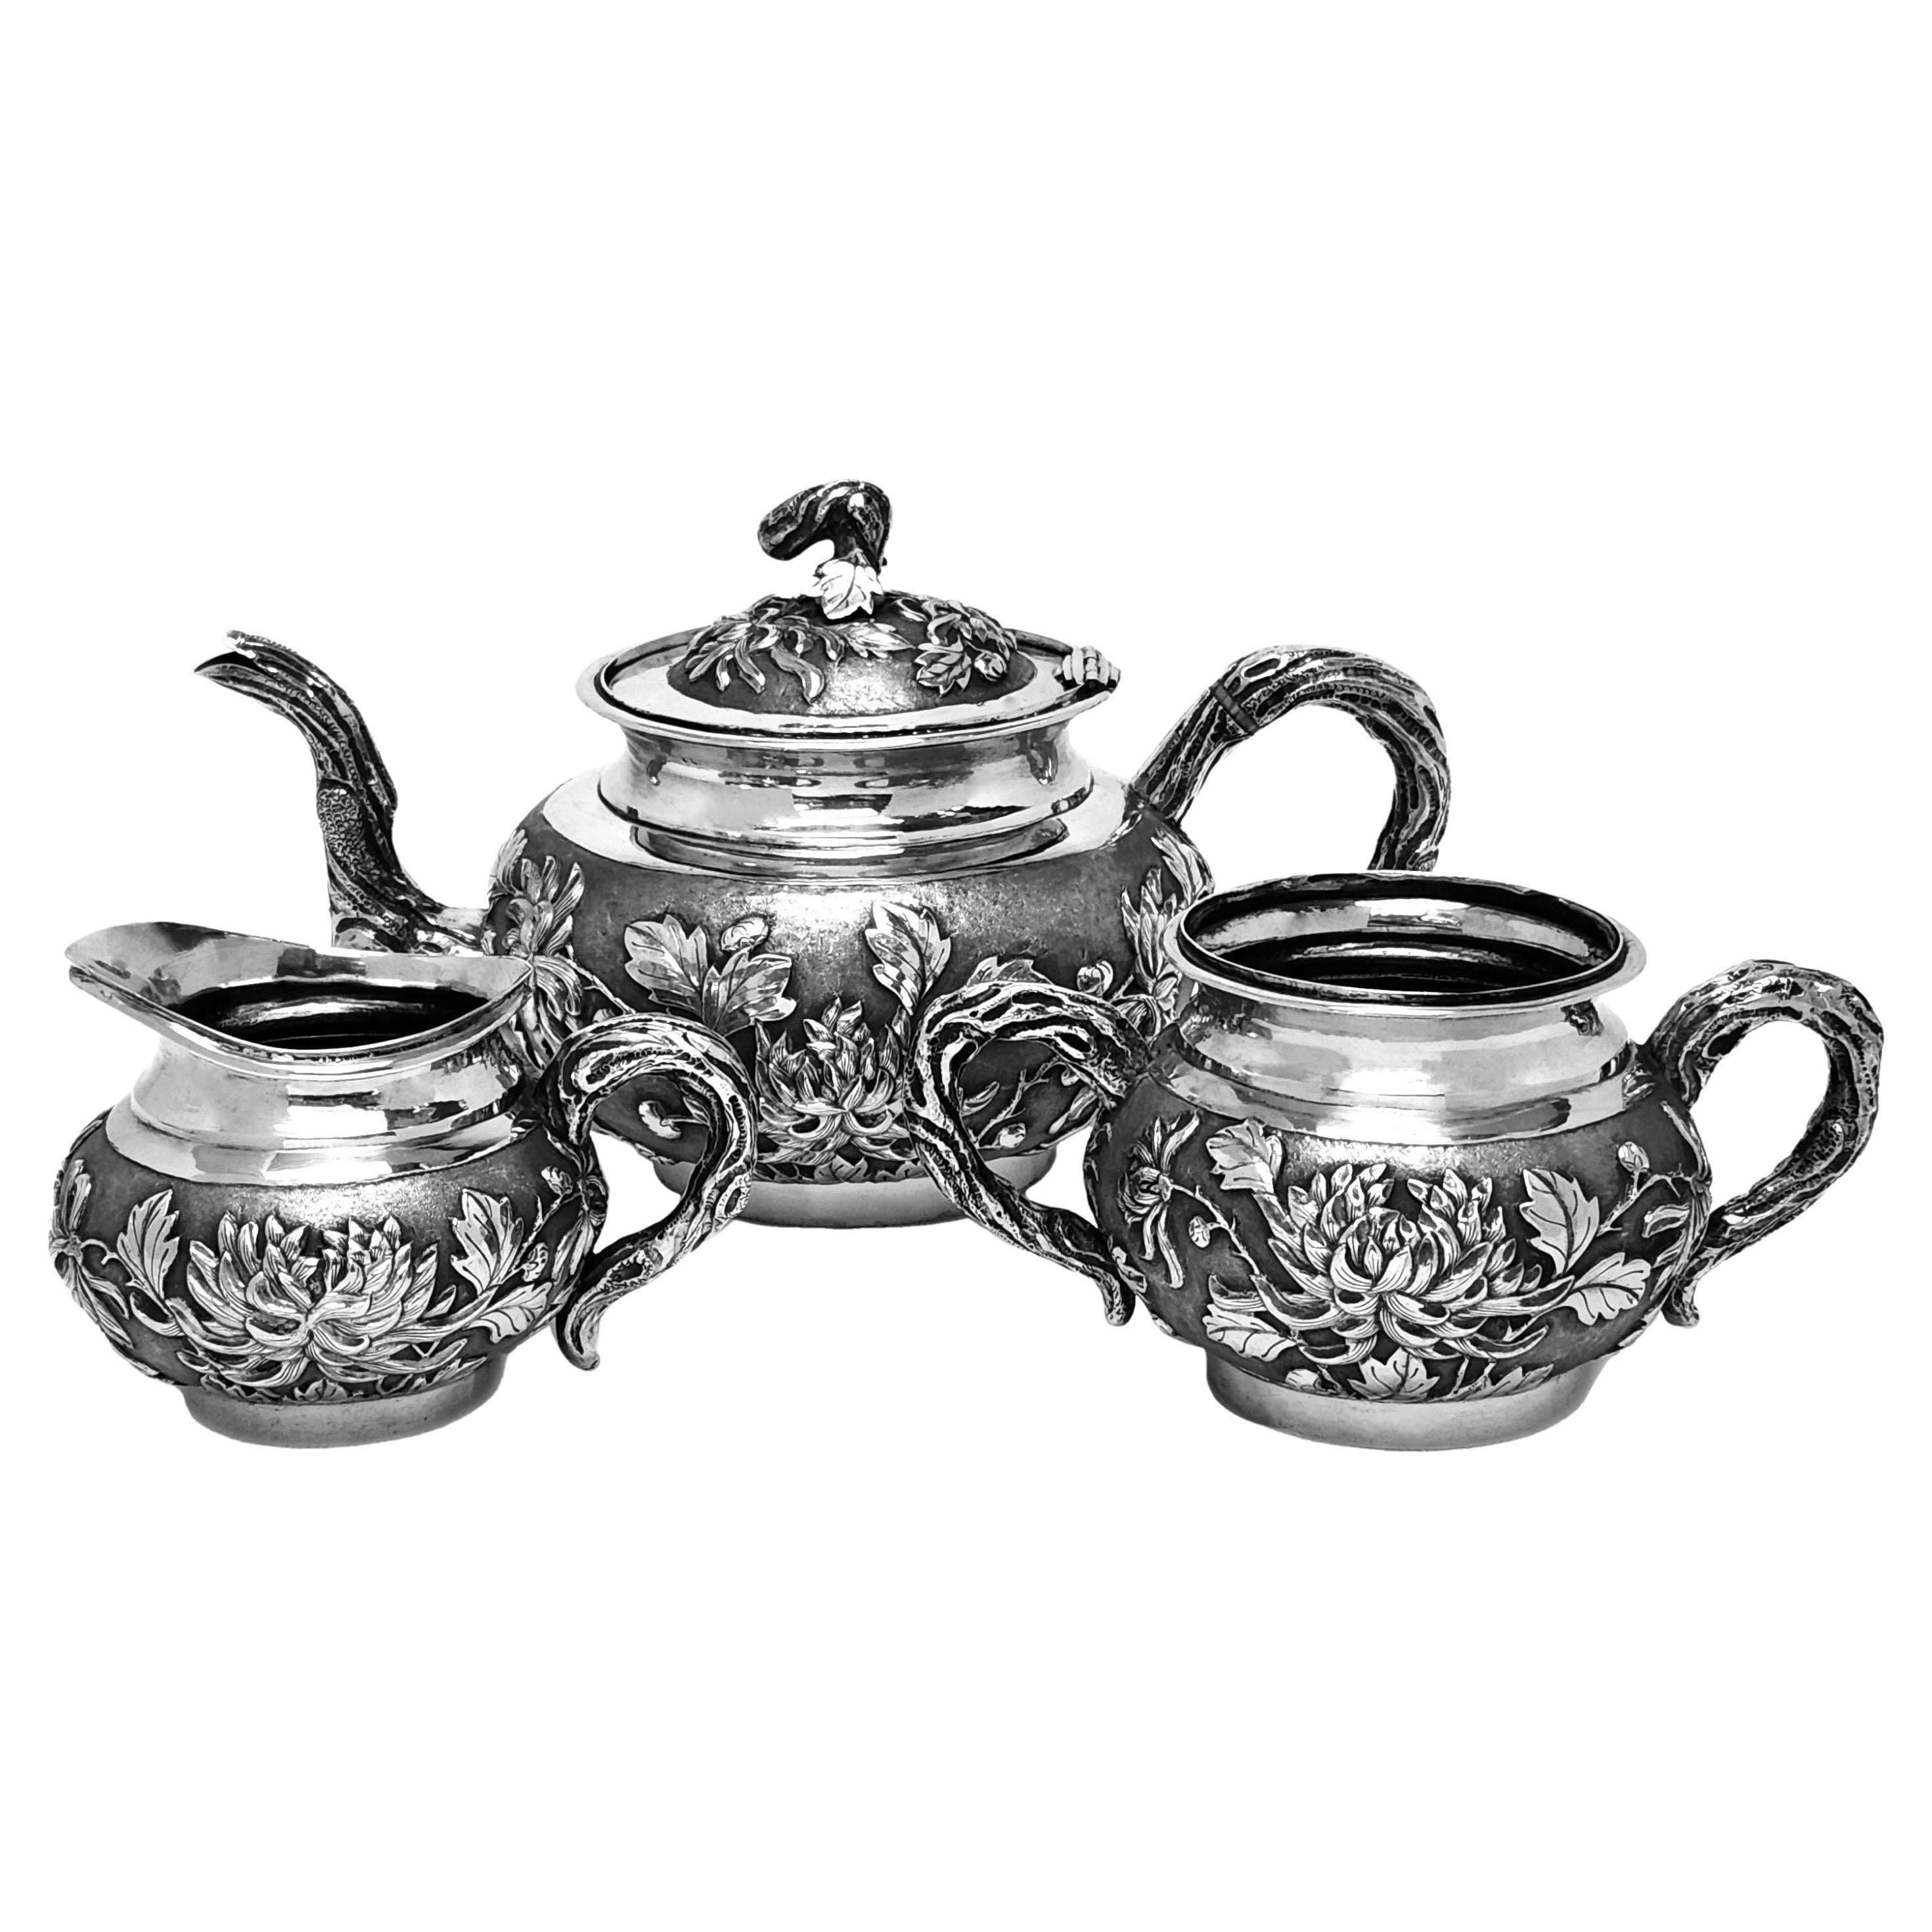 Antique Chinese Export Silver 3 piece Tea Set c. 1800